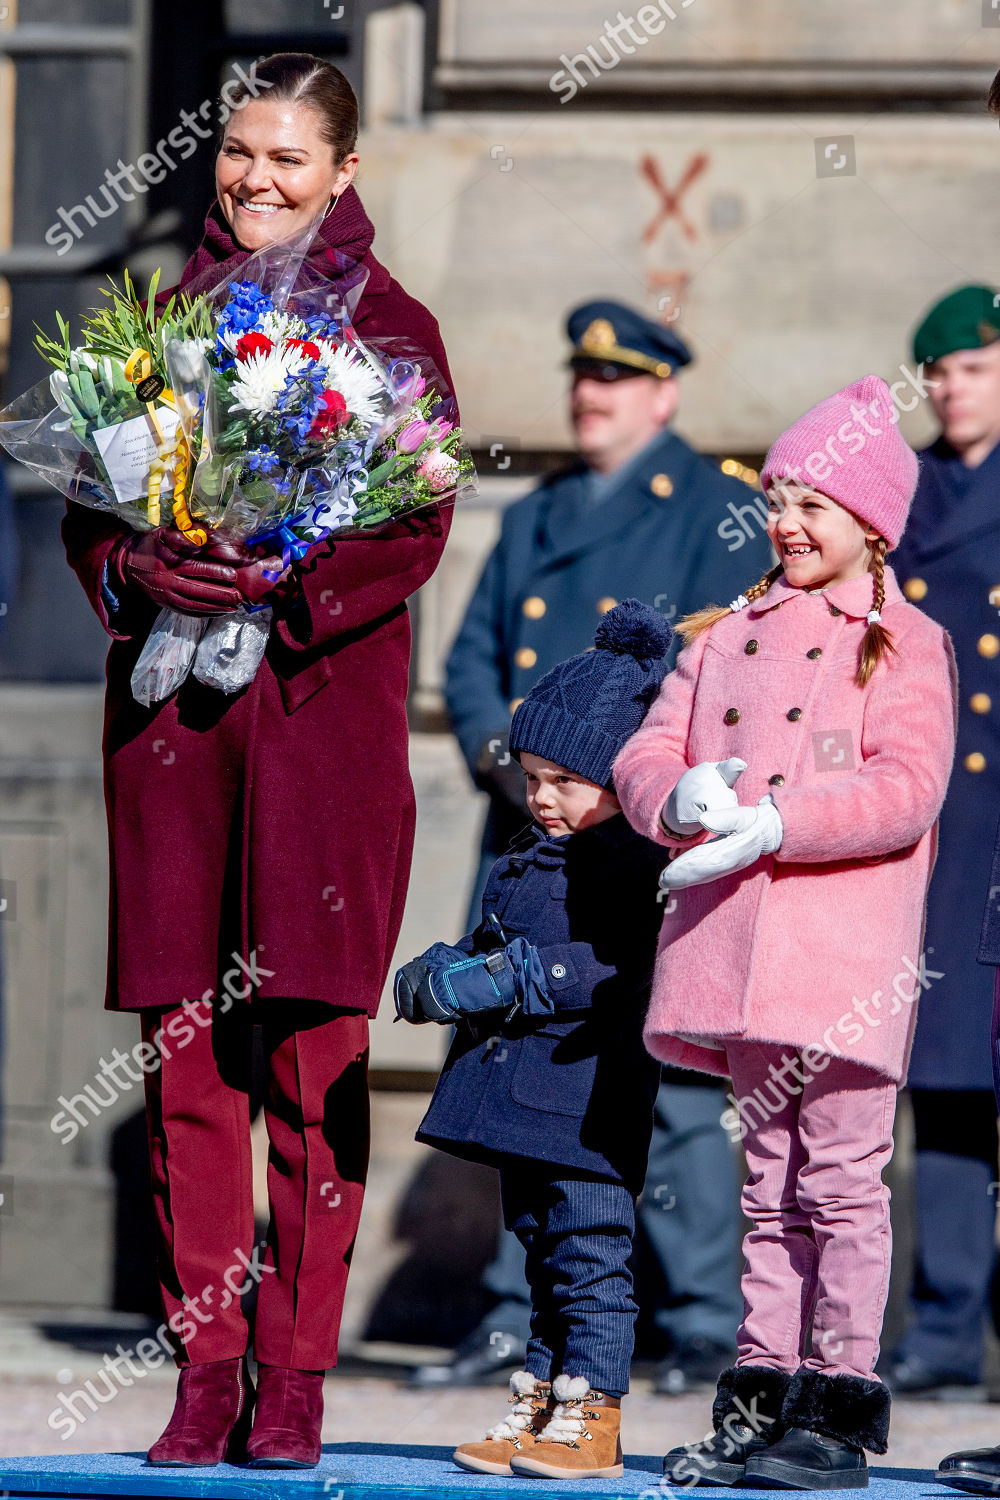 crown-princess-victoria-name-day-celebrations-stockholm-sweden-shutterstock-editorial-10151872as.jpg